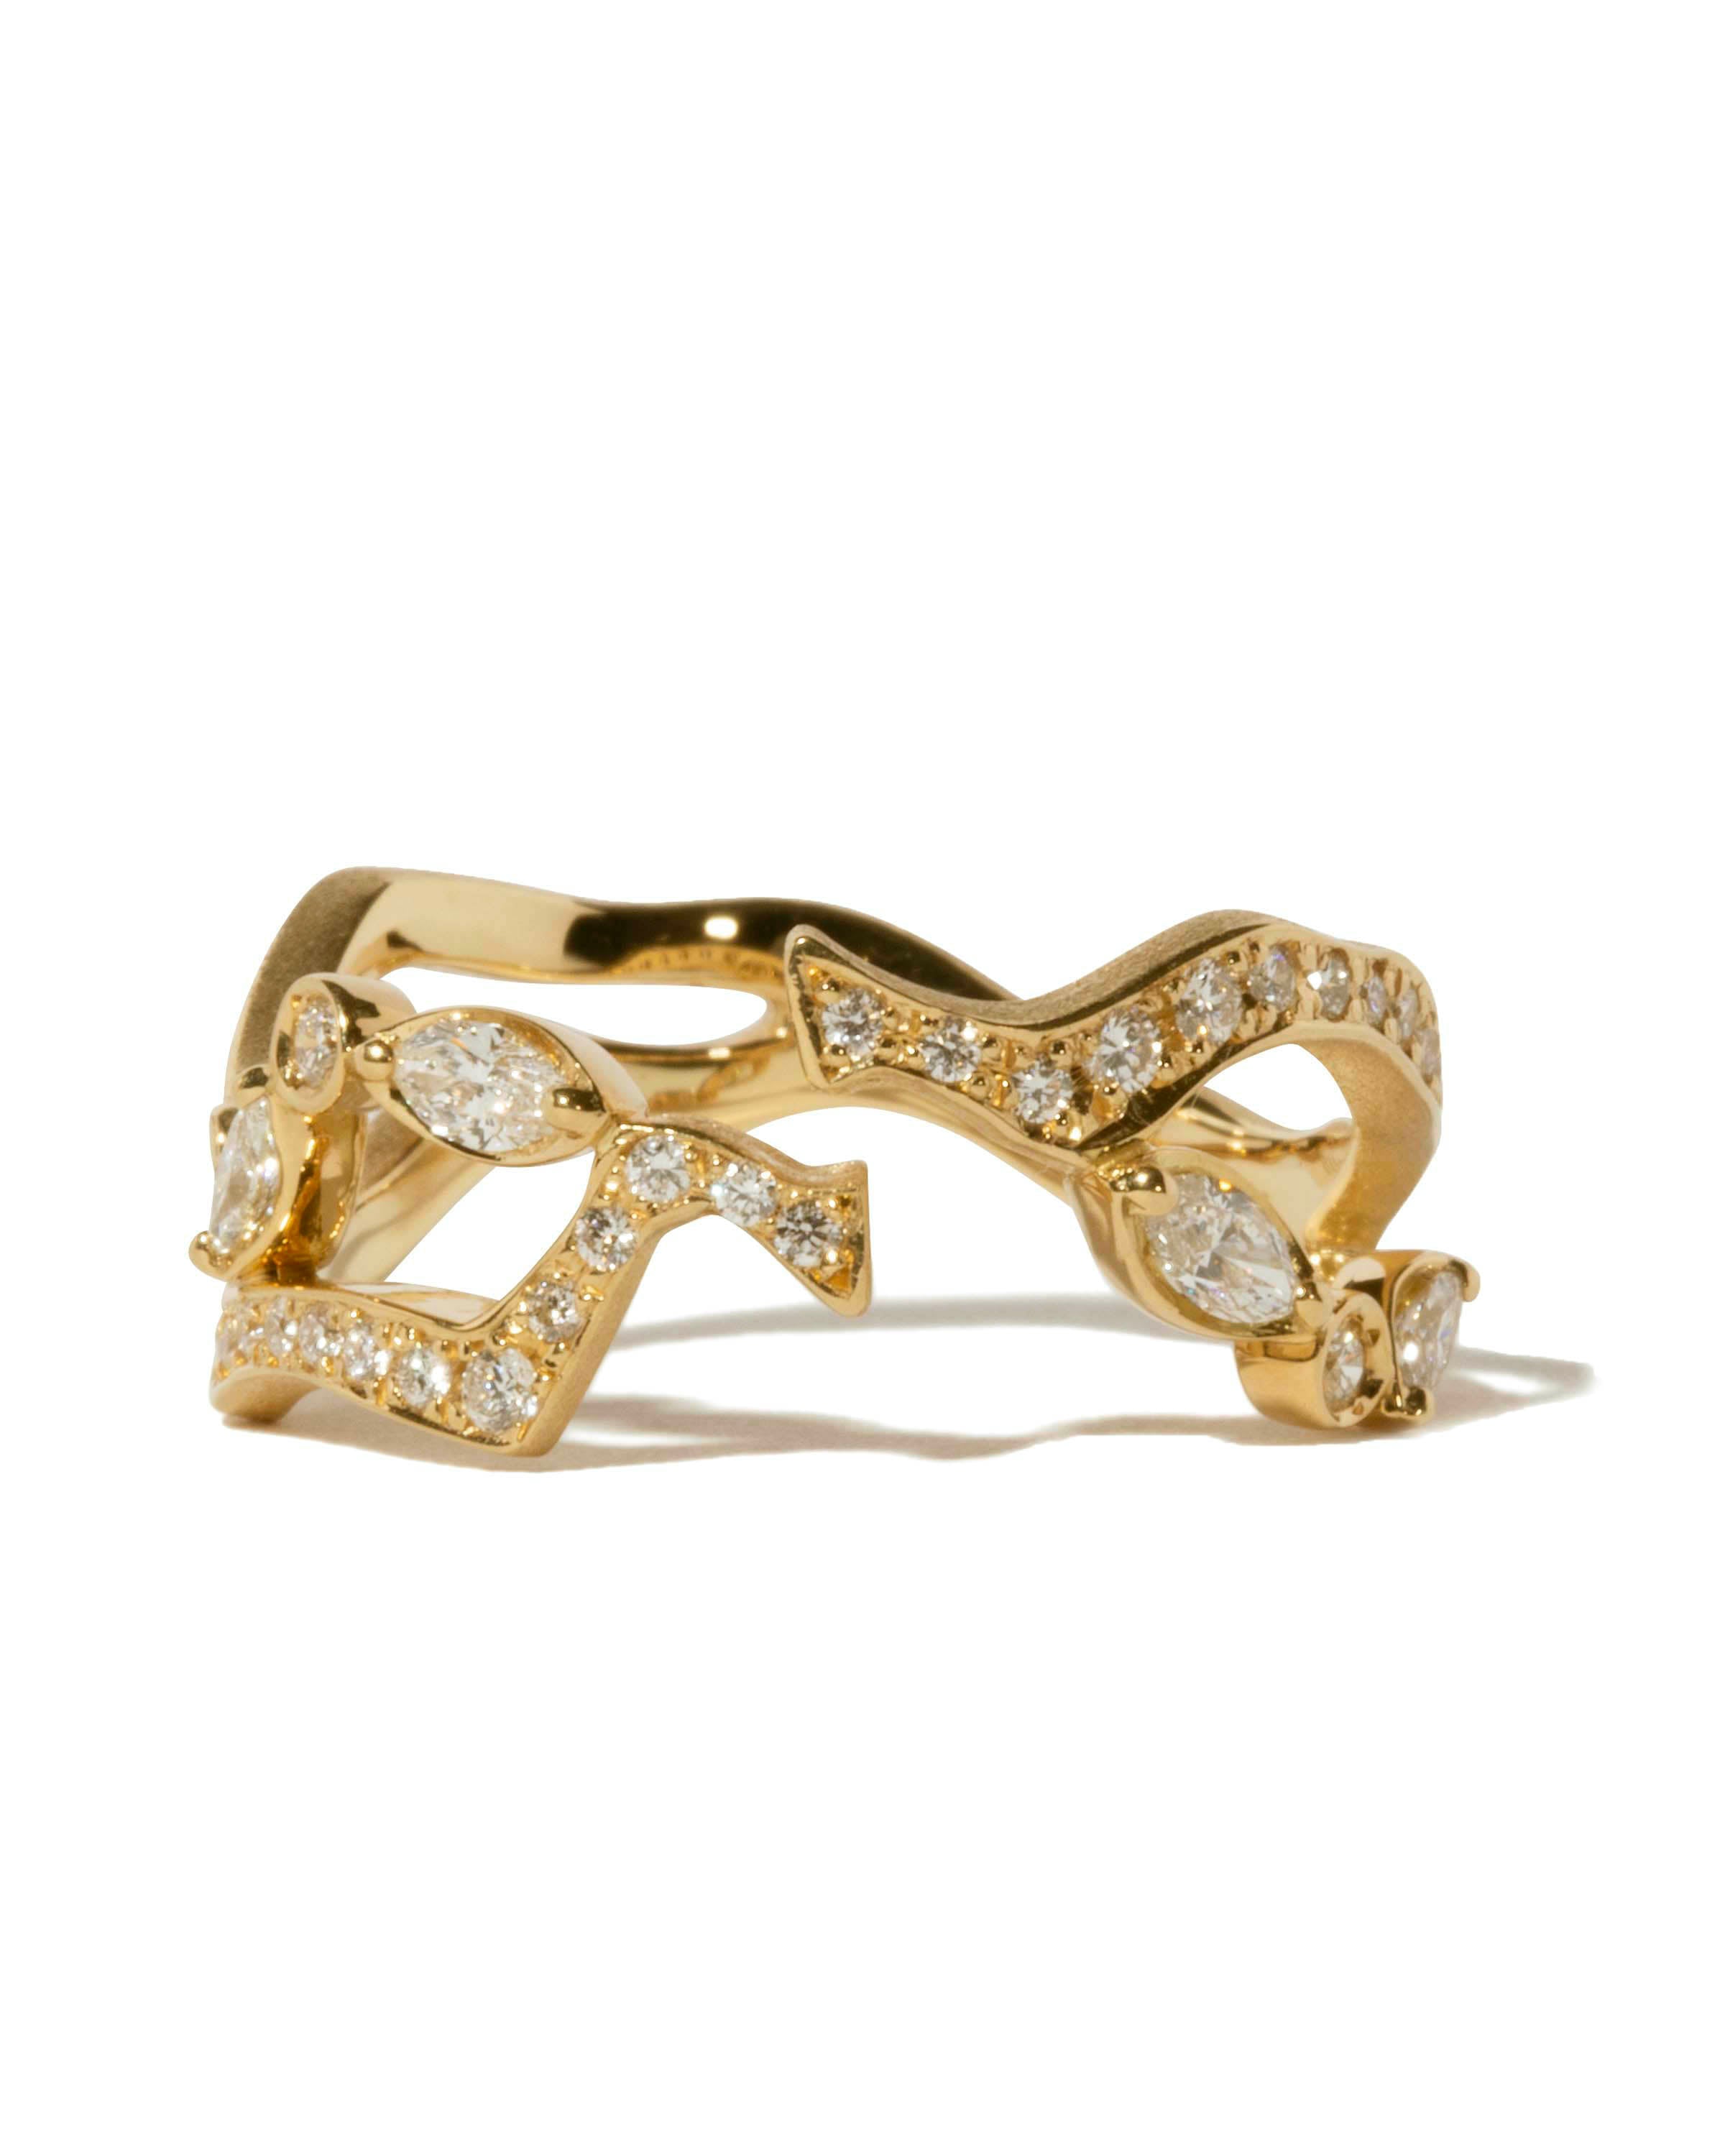 Dior Rose Pré Catelan White Coral Diamond and 18 Carats Yellow Gold Ring   Les Pierres de Julie